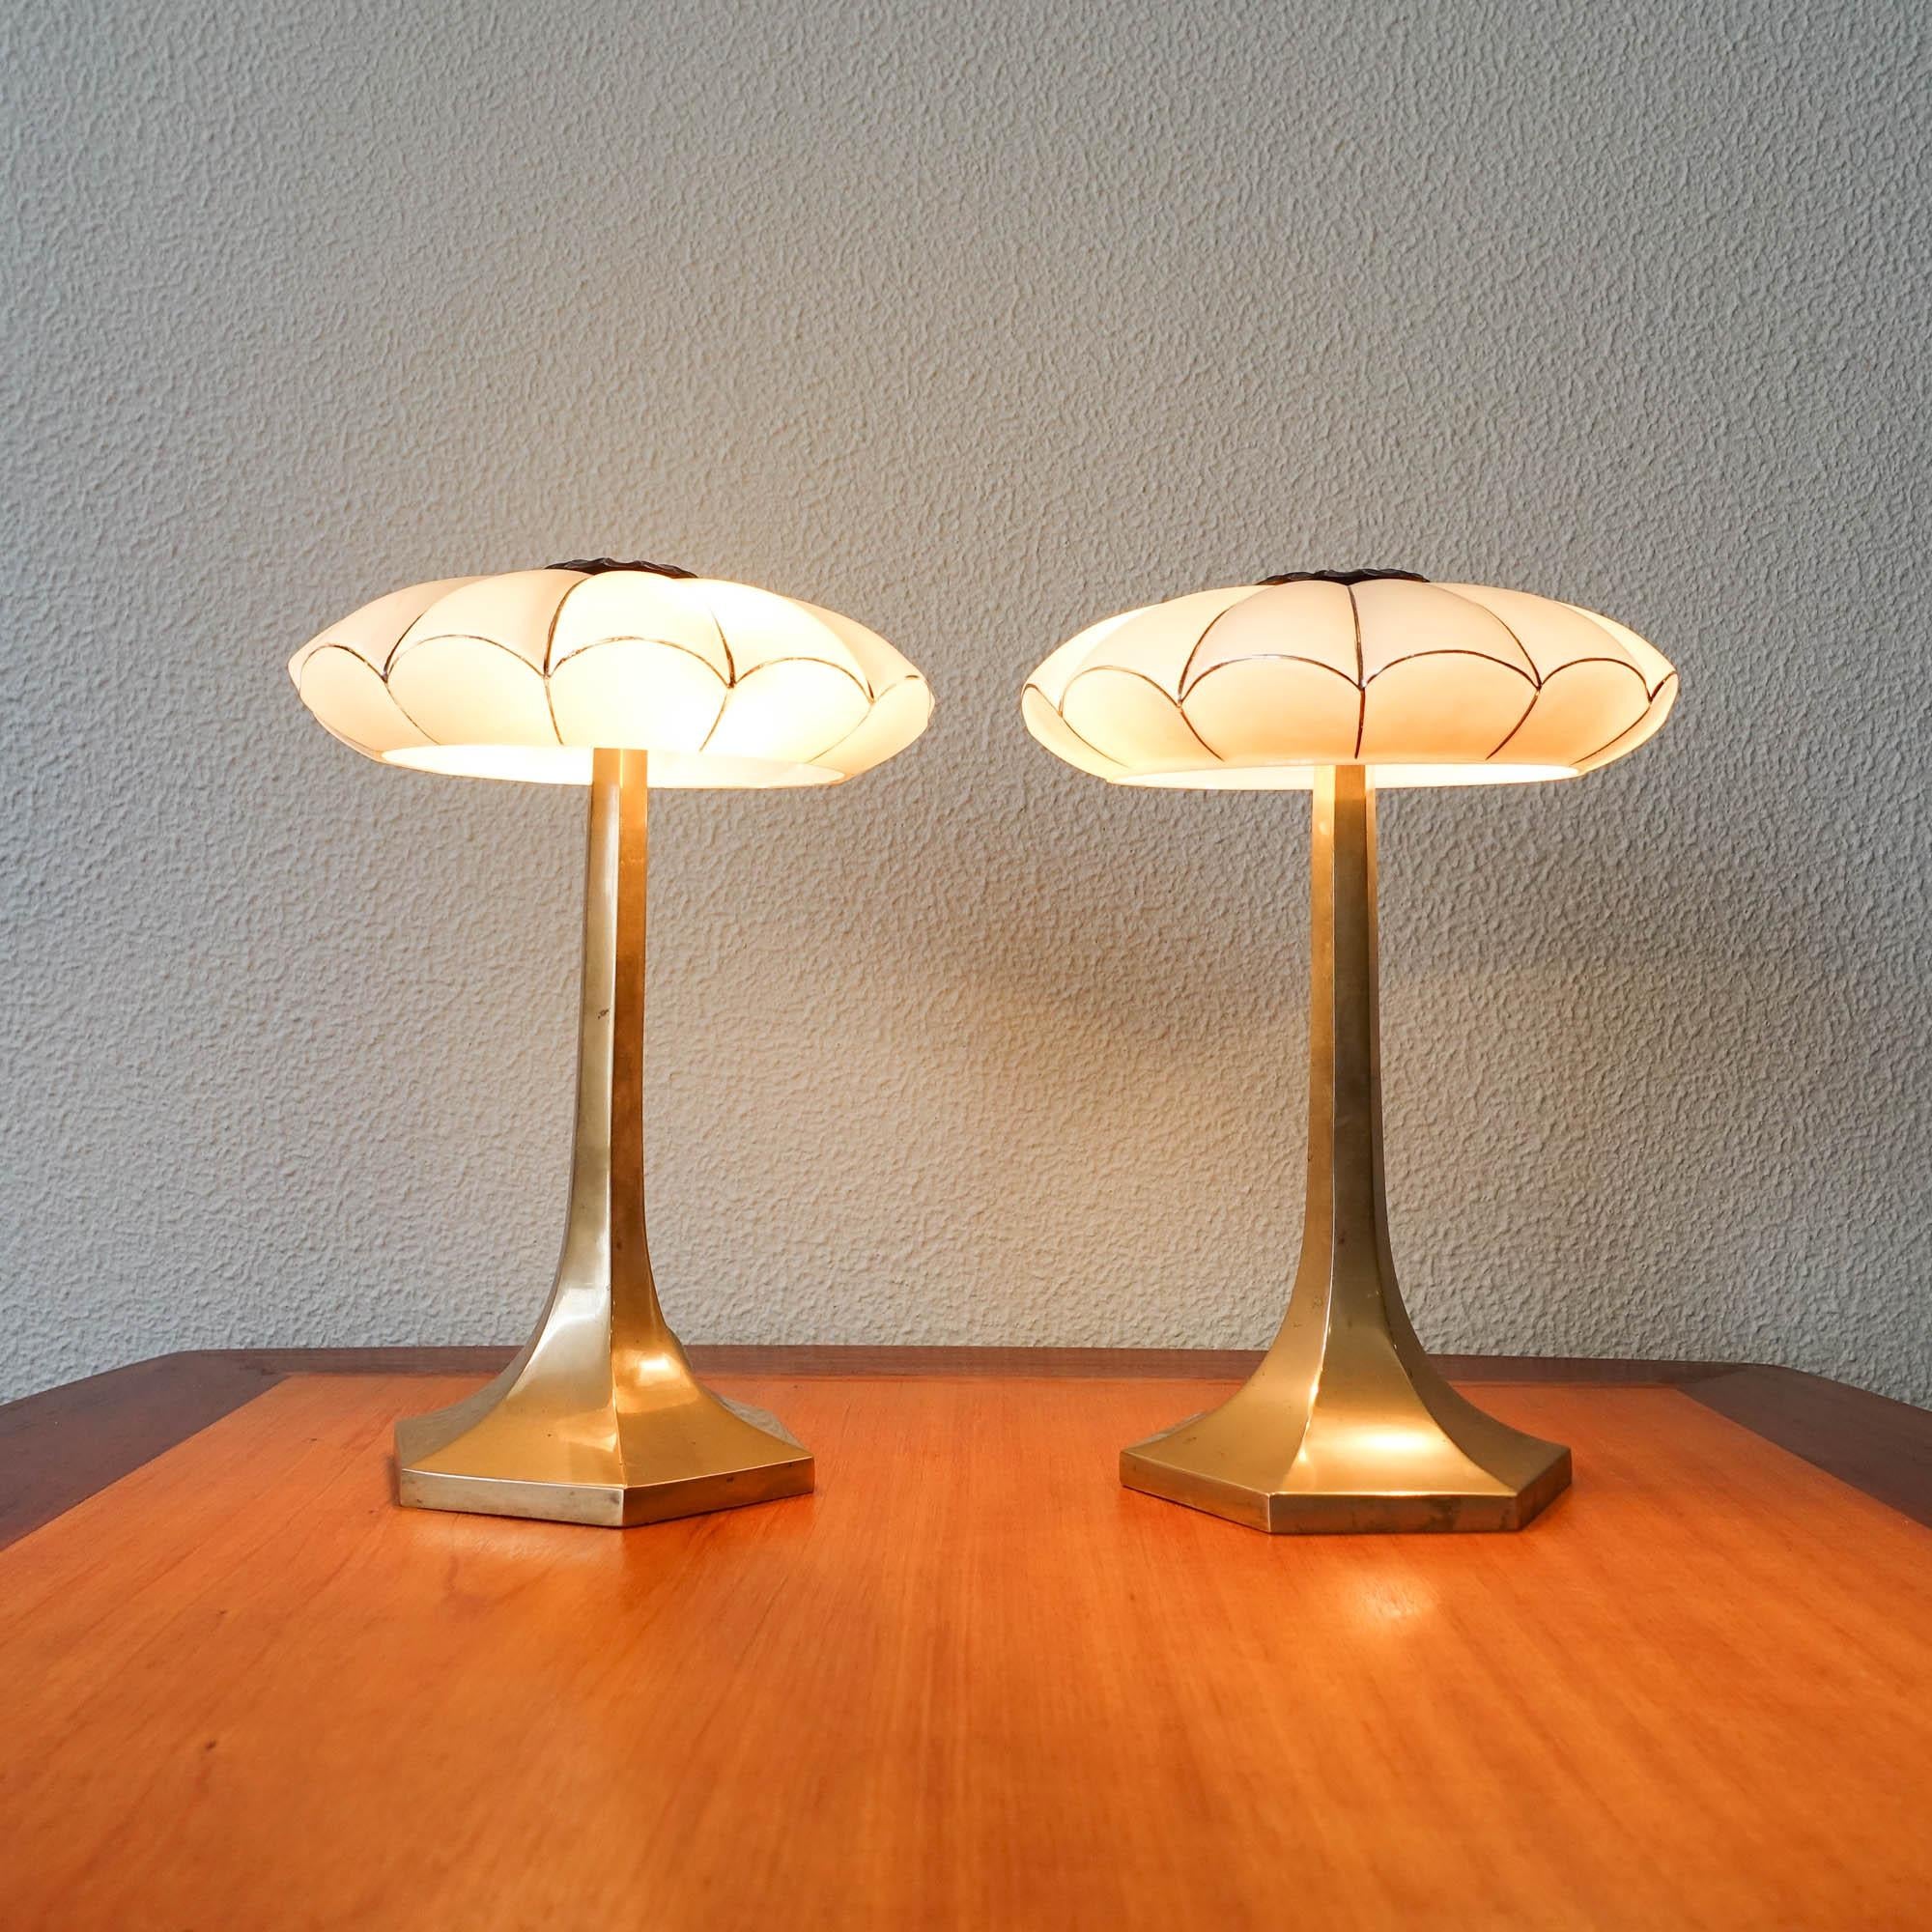 Austrian Pair of Art Deco Table Lamps from Josef Hoffman for Wiener Werkstatte, 1930's